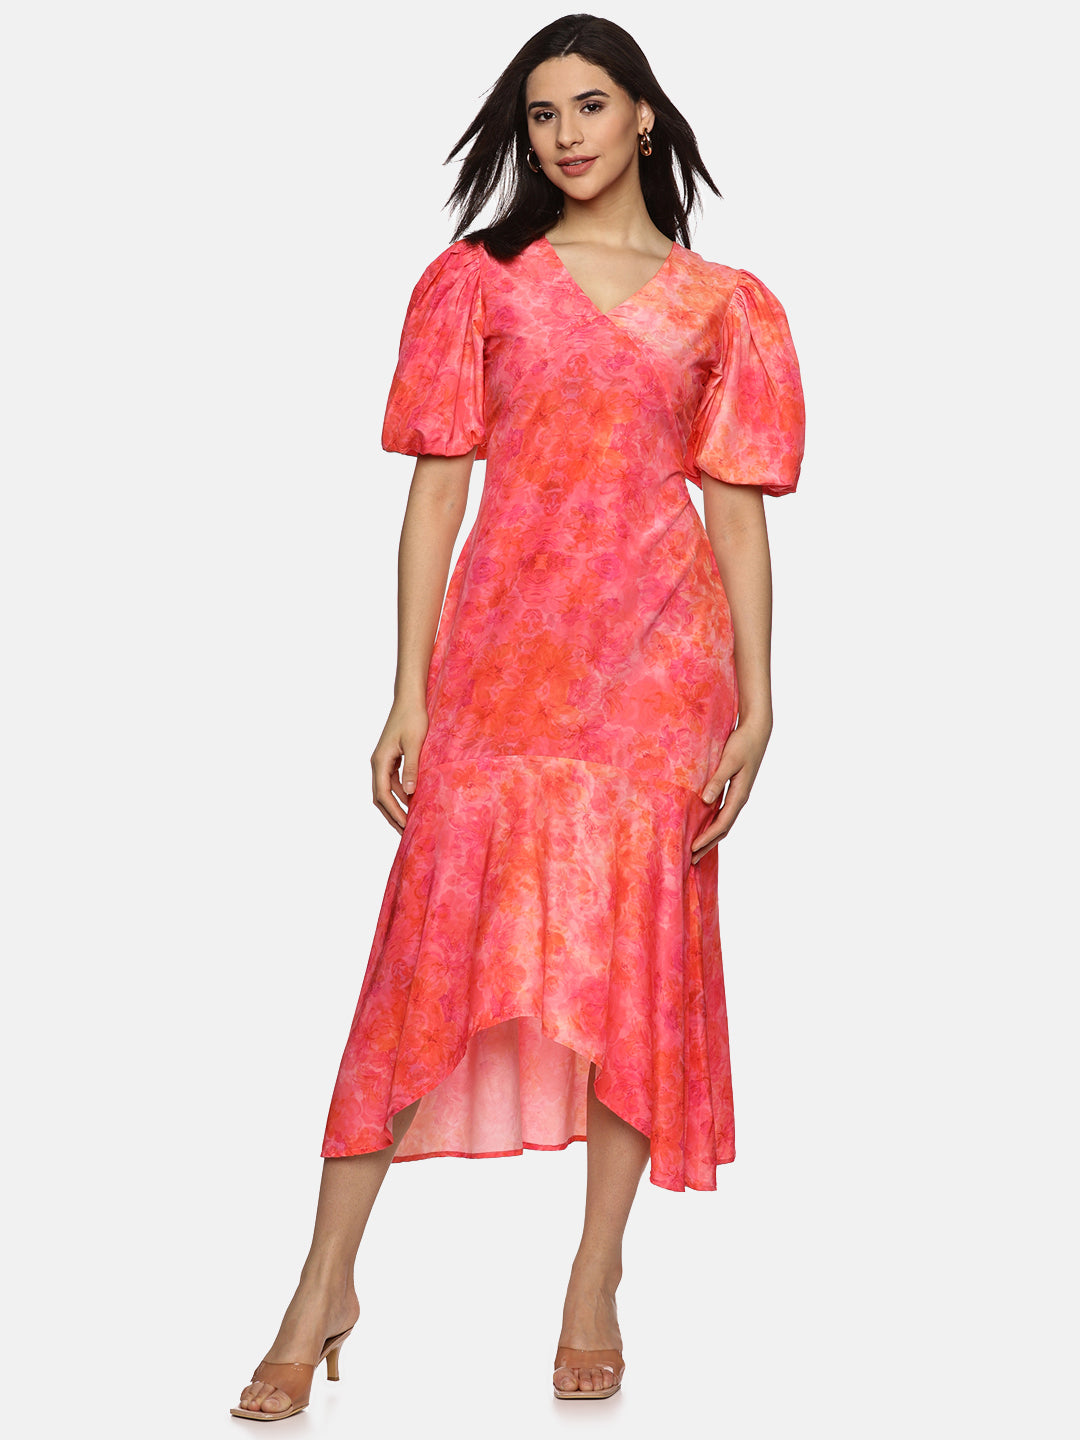 IS.U Floral Pink High Low Midaxi Dress